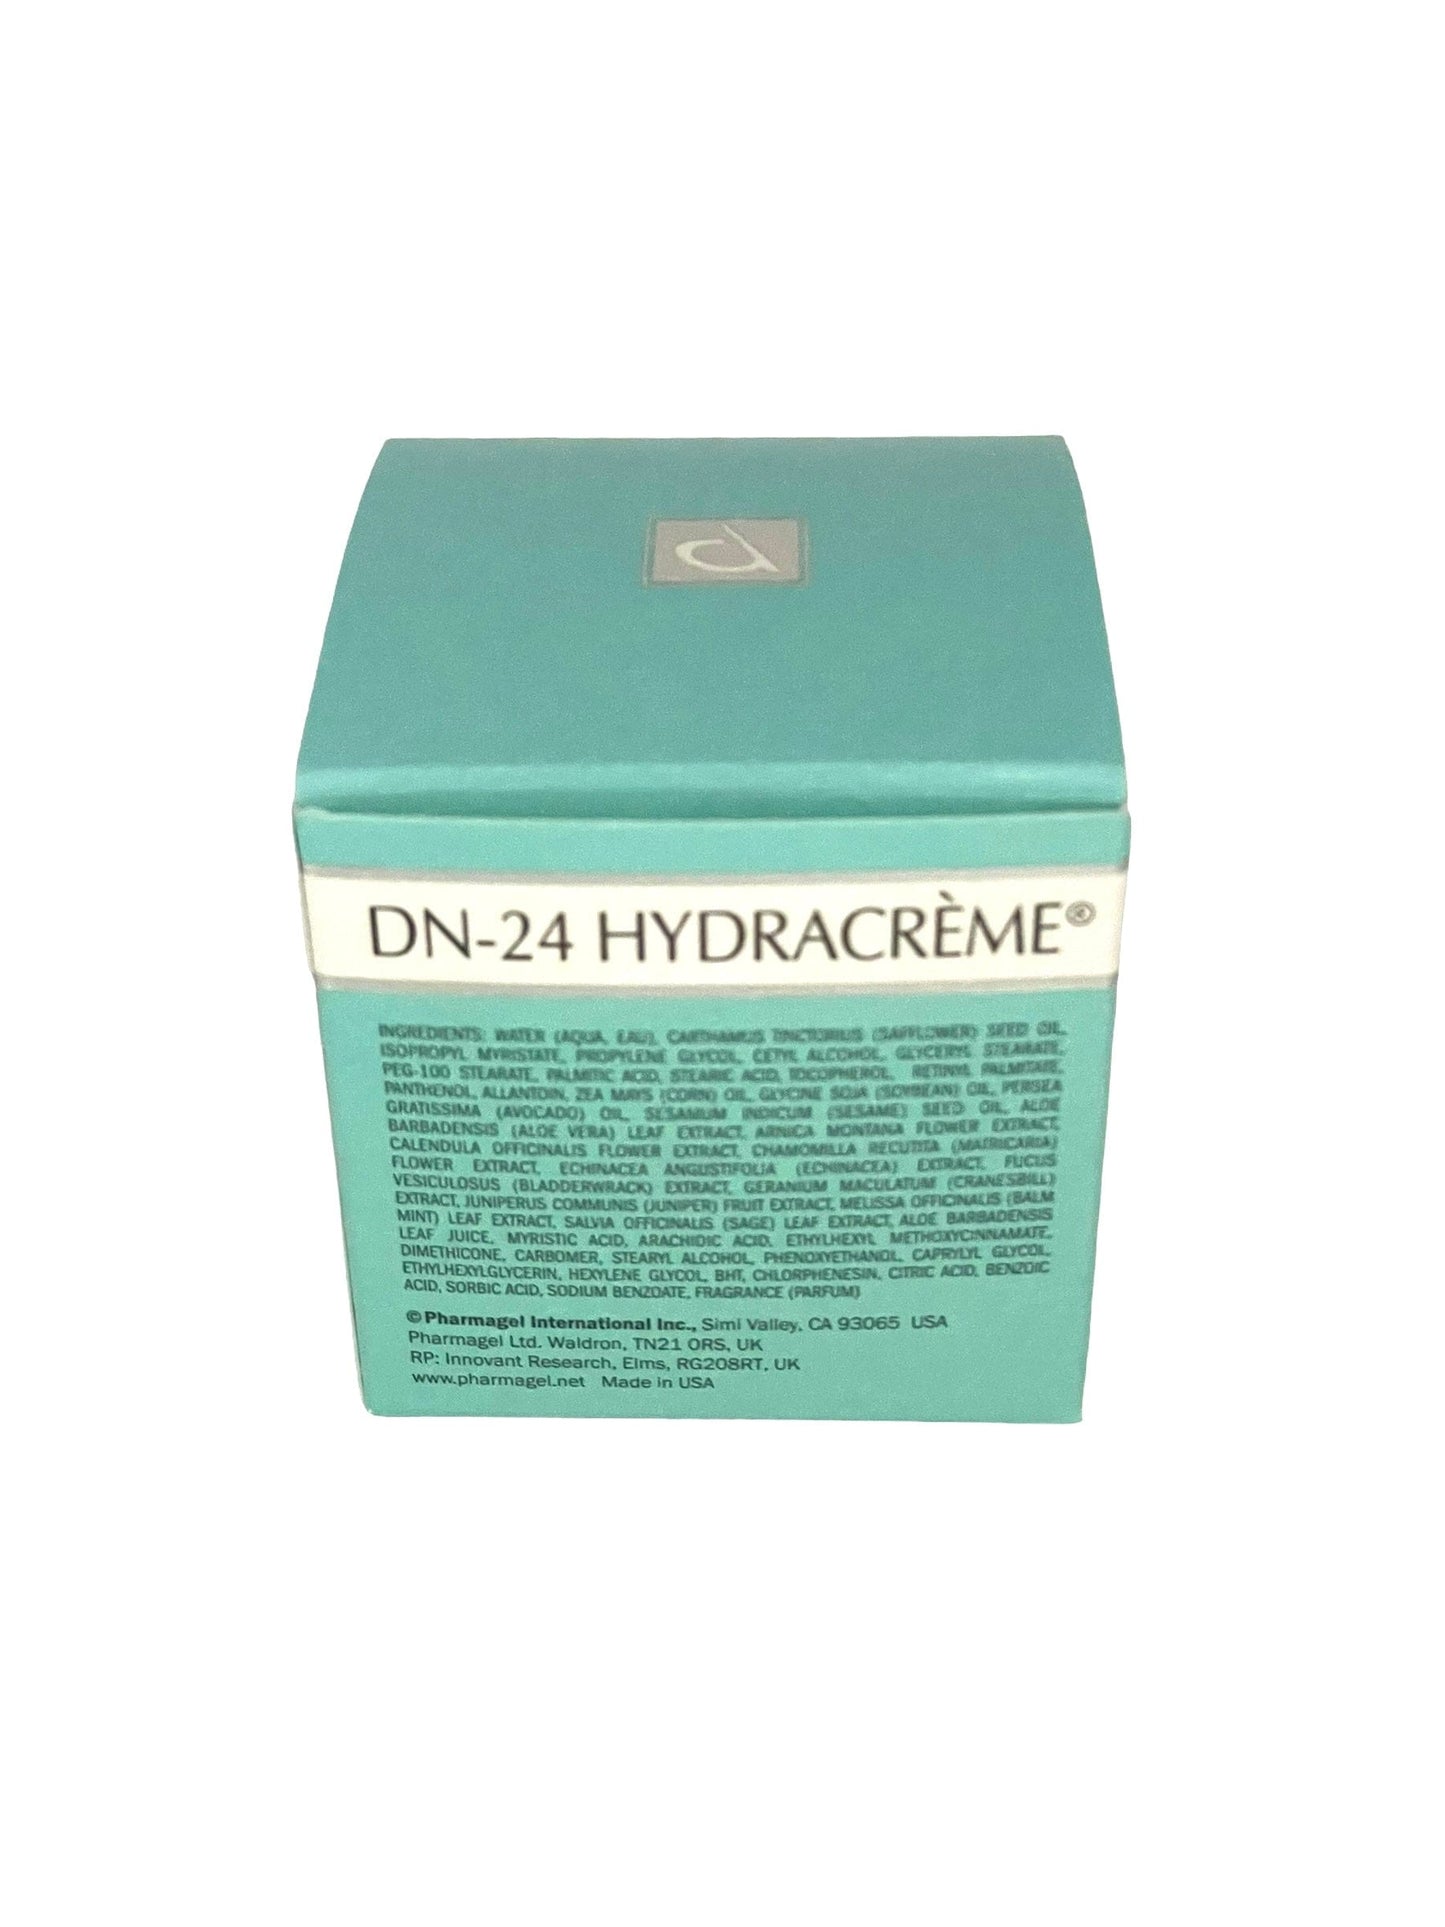 Pharmagel DN-24 Hydracreme Intensive Vitamin Face Moisturizer Day & Night 2 oz Face Cream